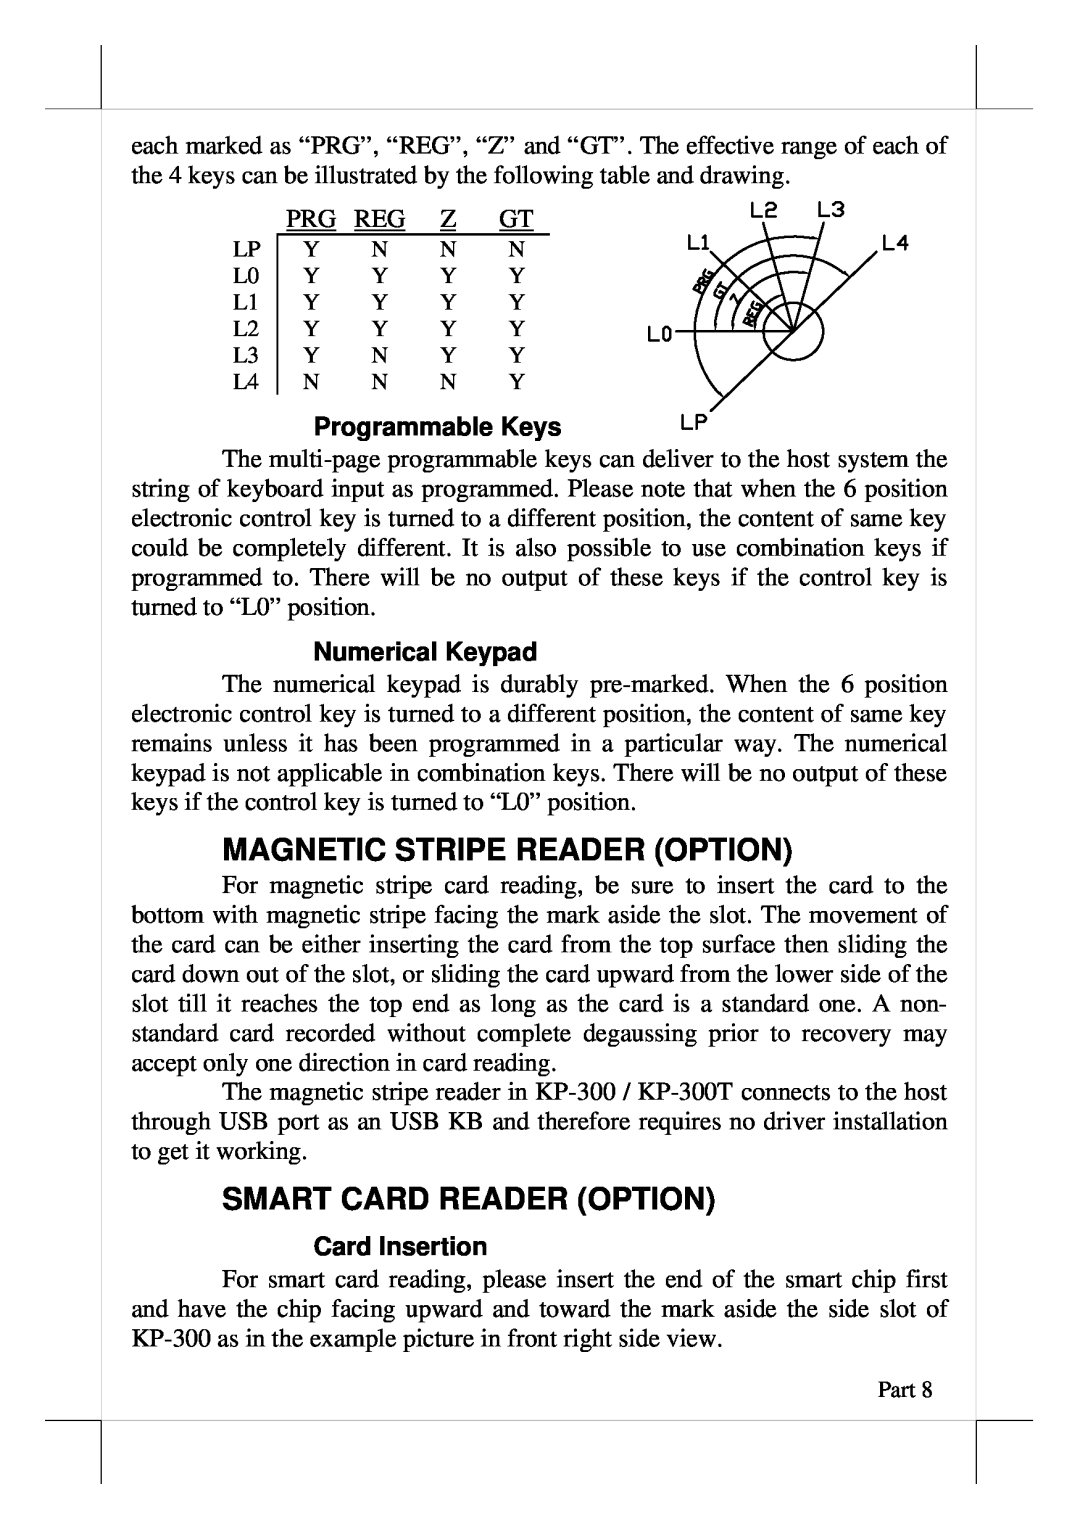 POSIFLEX Business Machines KP-300T Magnetic Stripe Reader Option, Smart Card Reader Option, Programmable Keys 